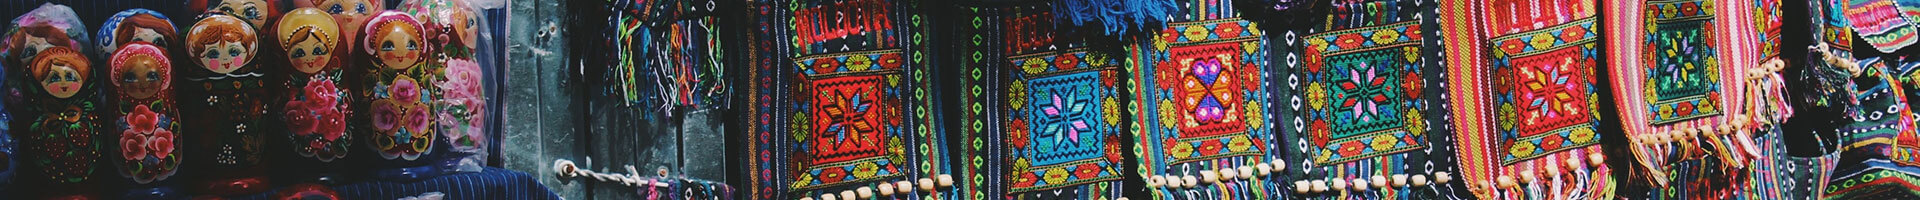 Detail of Moldovan crafts